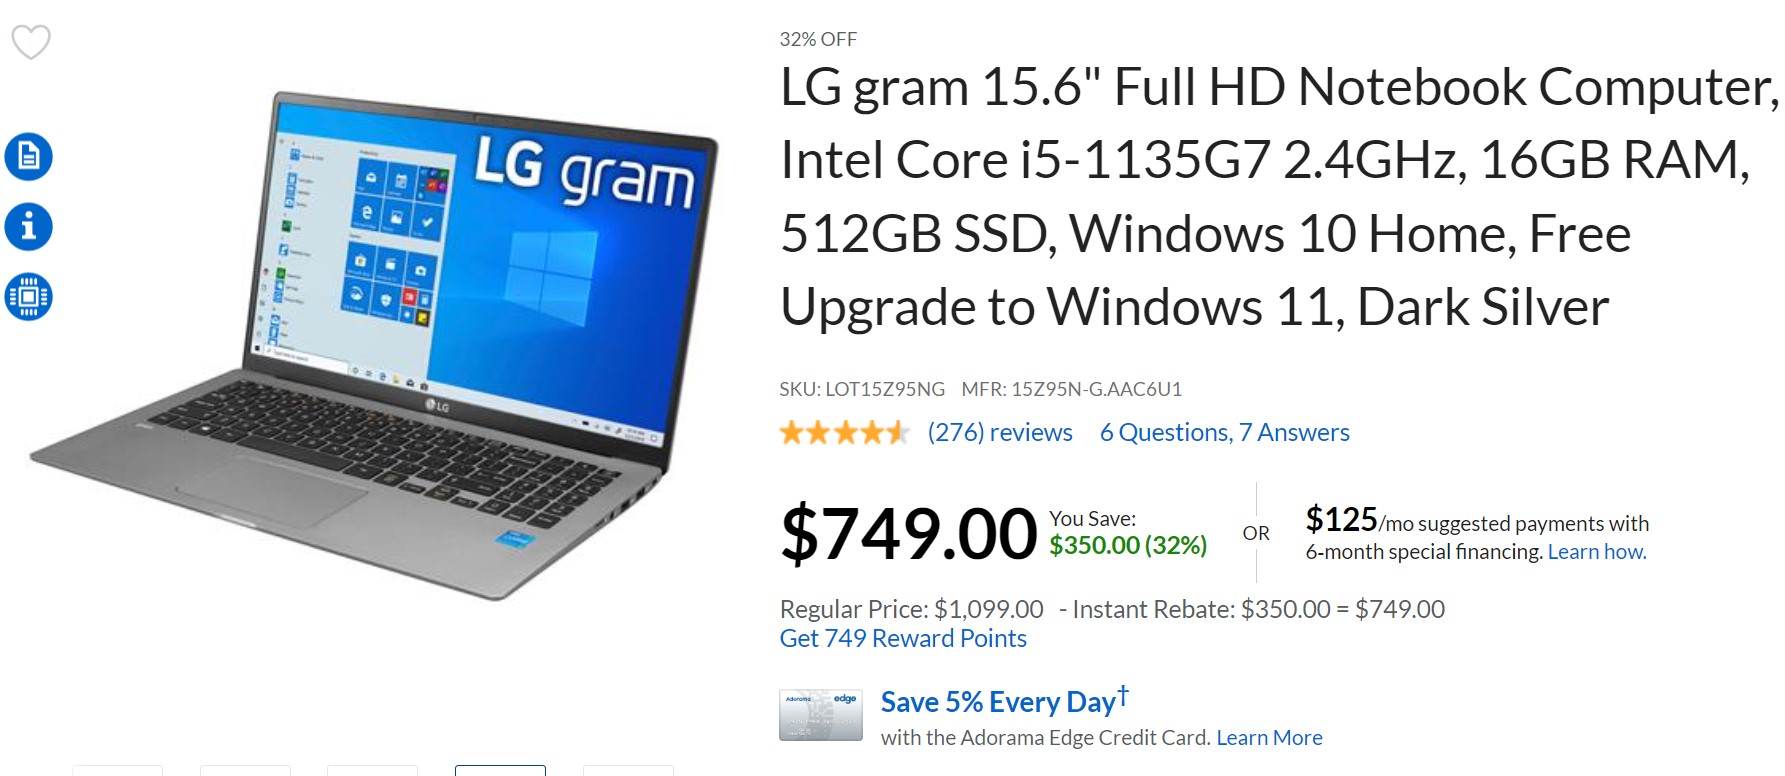 LG Gram 15.6 inch Full HD Notebook Adorama Deal